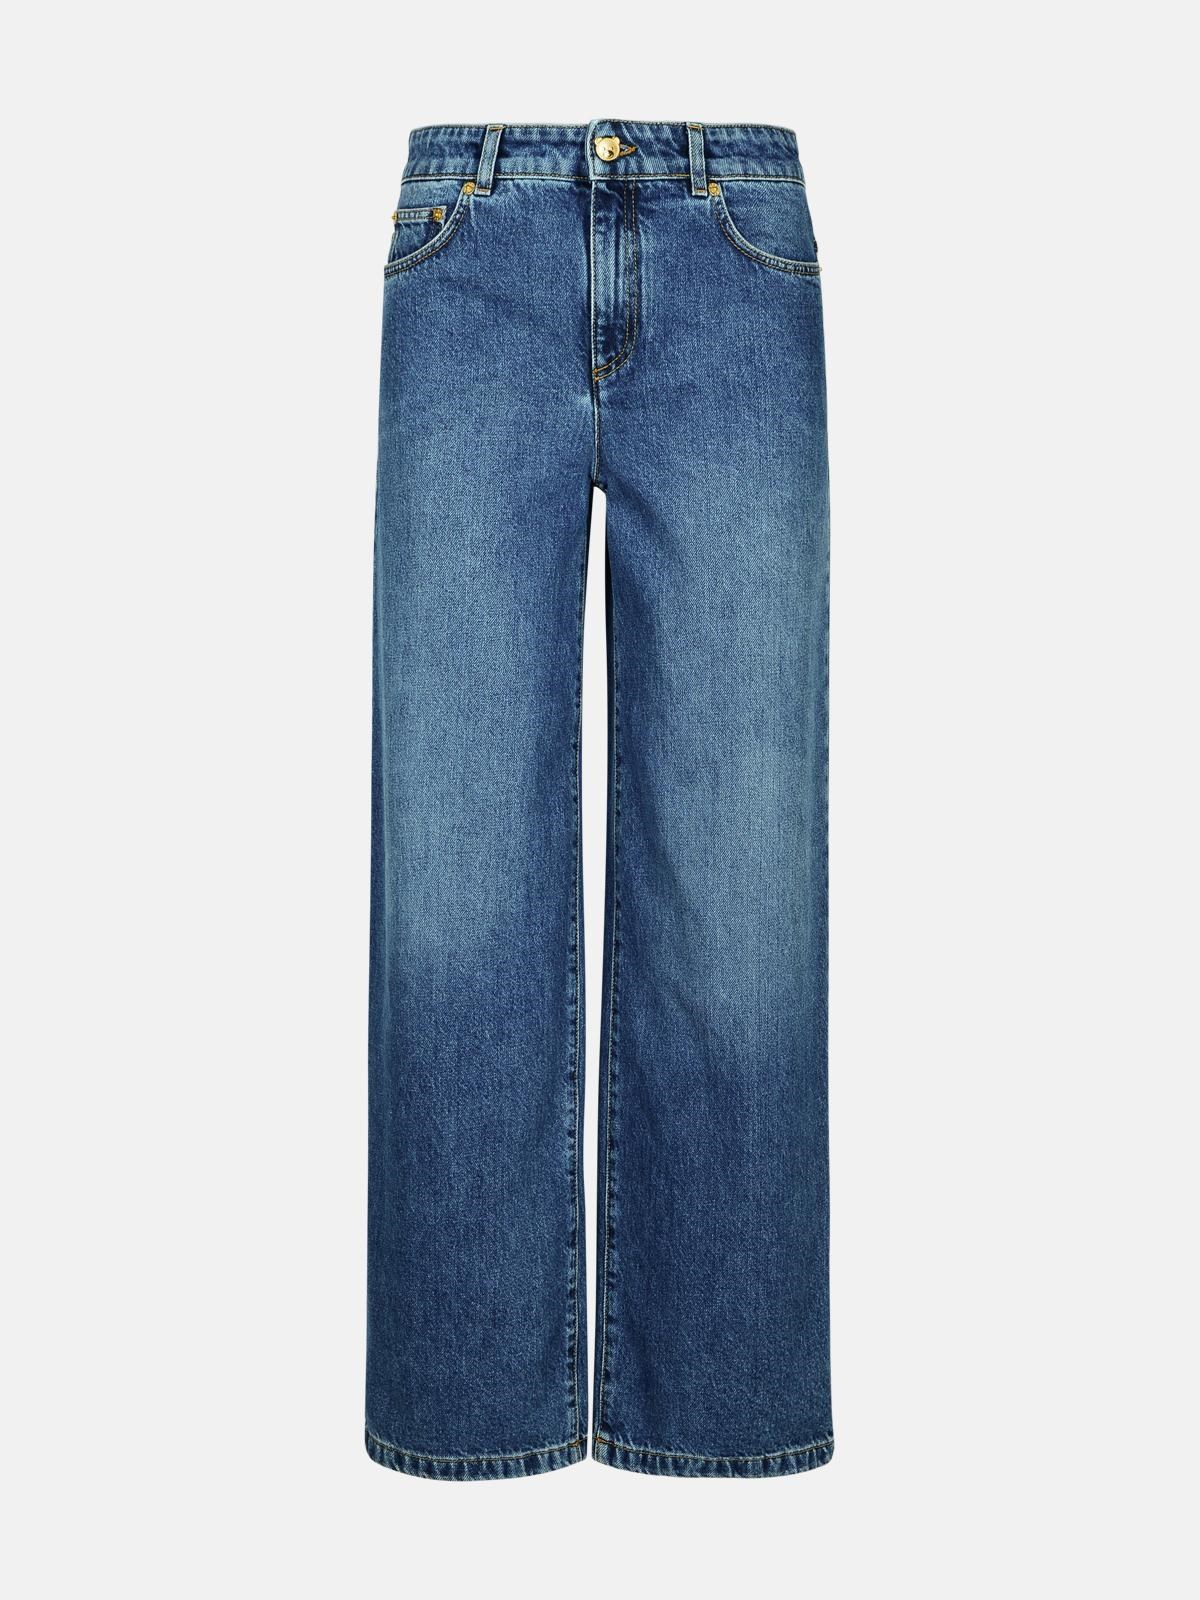 Moschino Blue Cotton Jeans